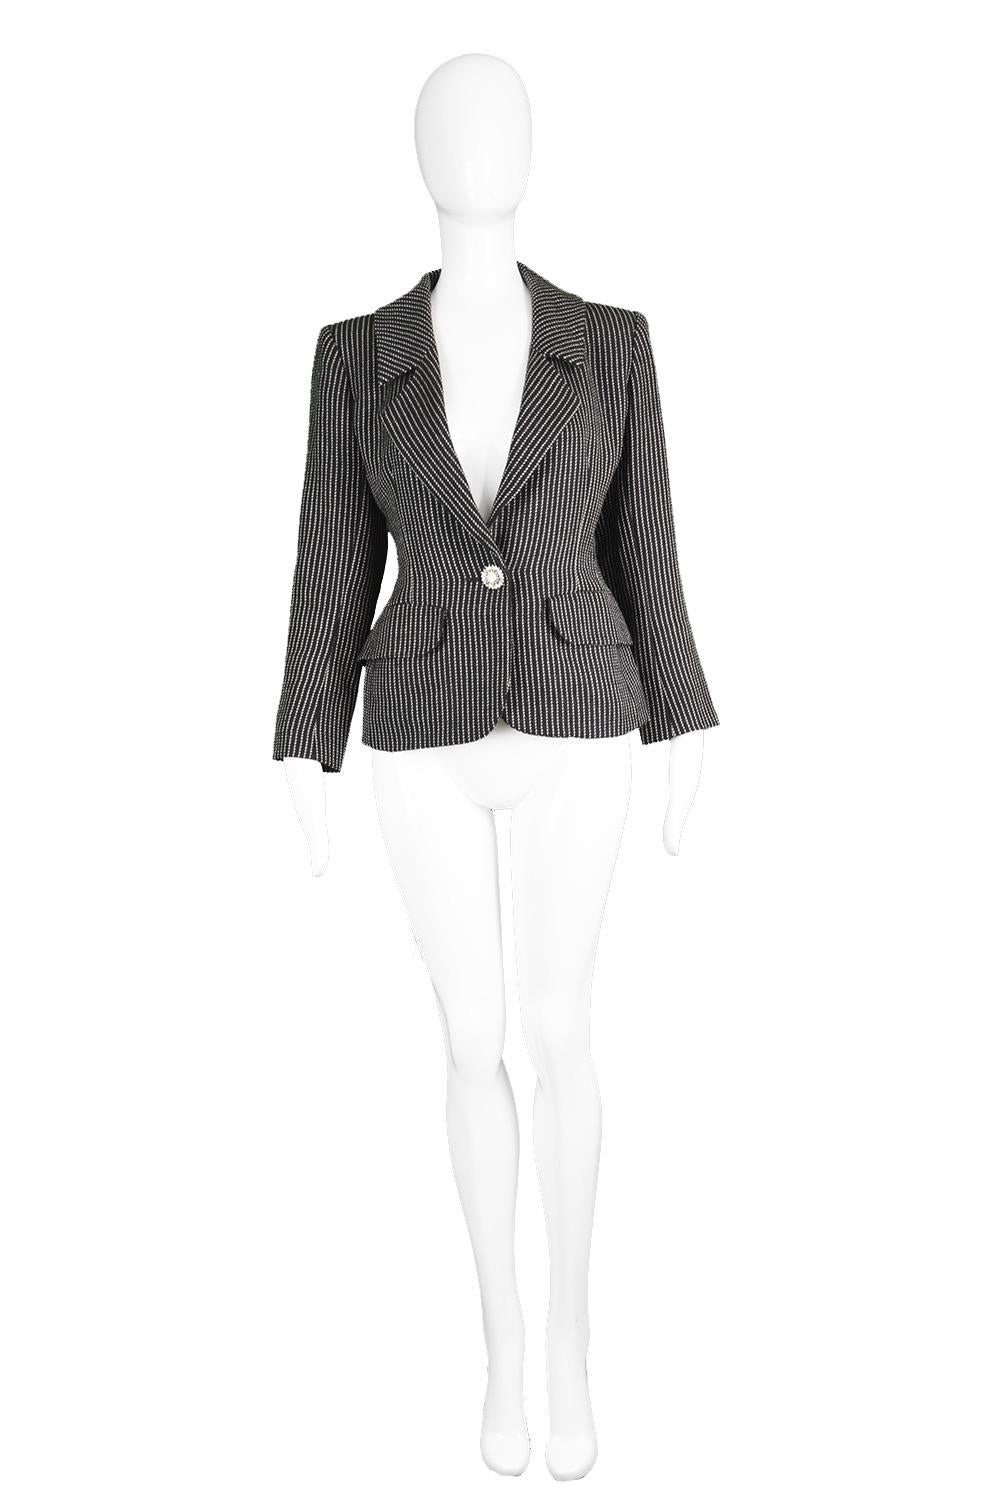 Yves Saint Laurent YSL Rive Gauche Vintage Women's Broken Pinstripe Blazer, 1980s 

Size: fits roughly like a modern women's UK 12/ US 8/ EU 40. Please check measurements. 
Bust - 38” / 96cm
Waist - 30” / 76cm
Length (Shoulder to Hem) - 22” /